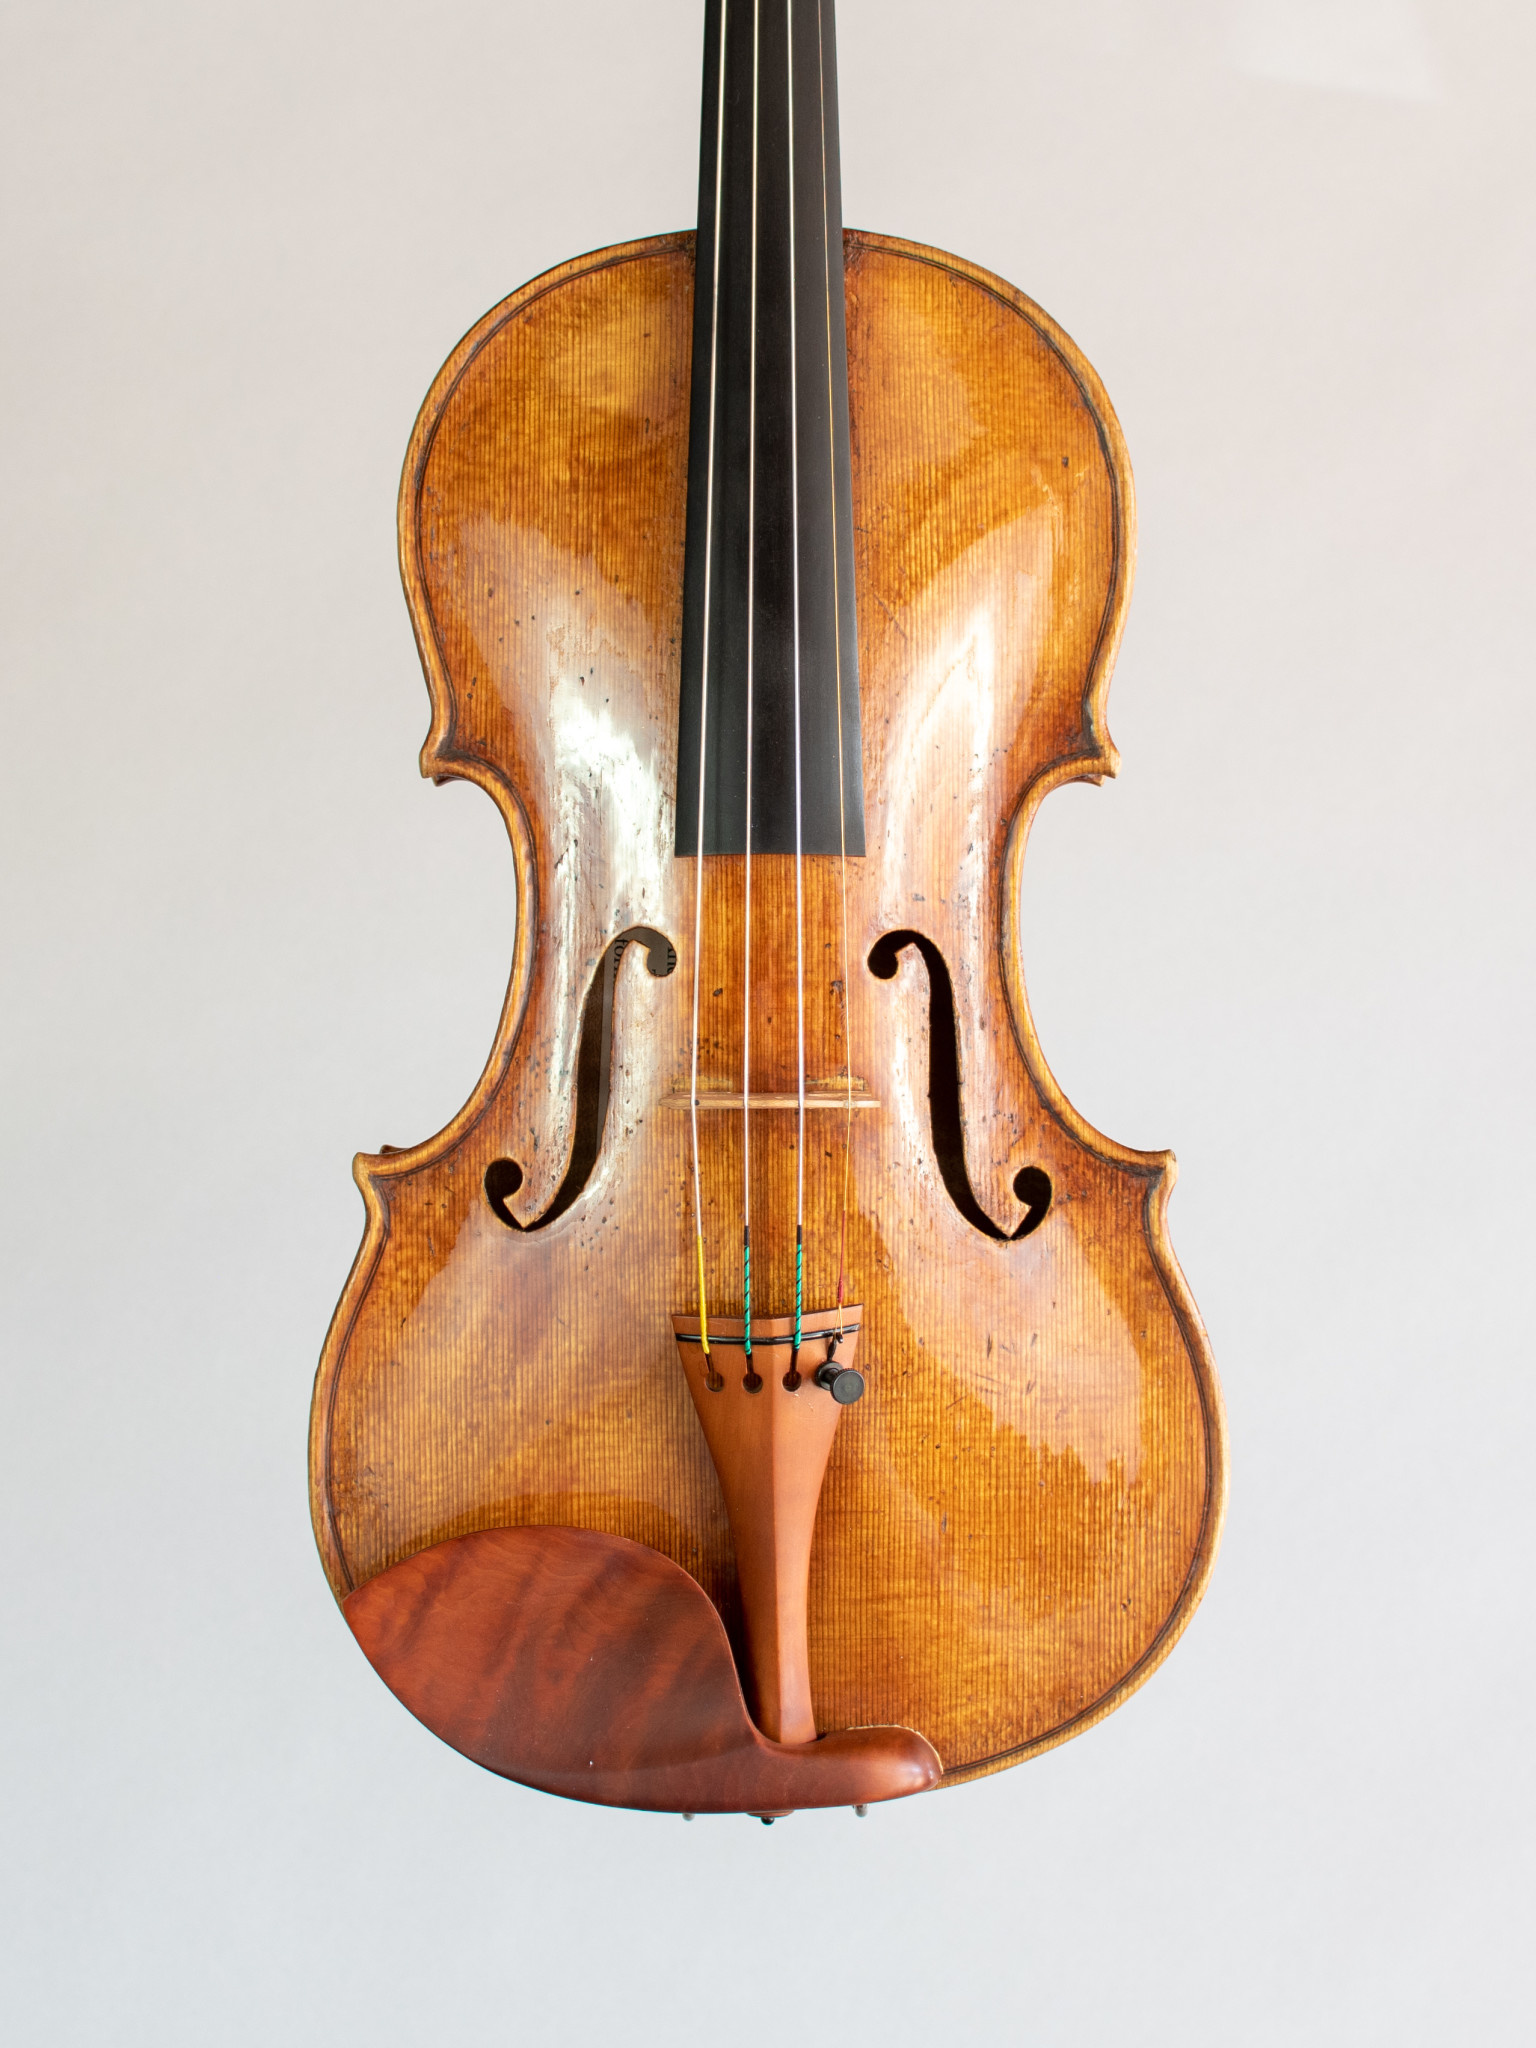 Japanese Andreas Preuss violin, Tokyo, Japan